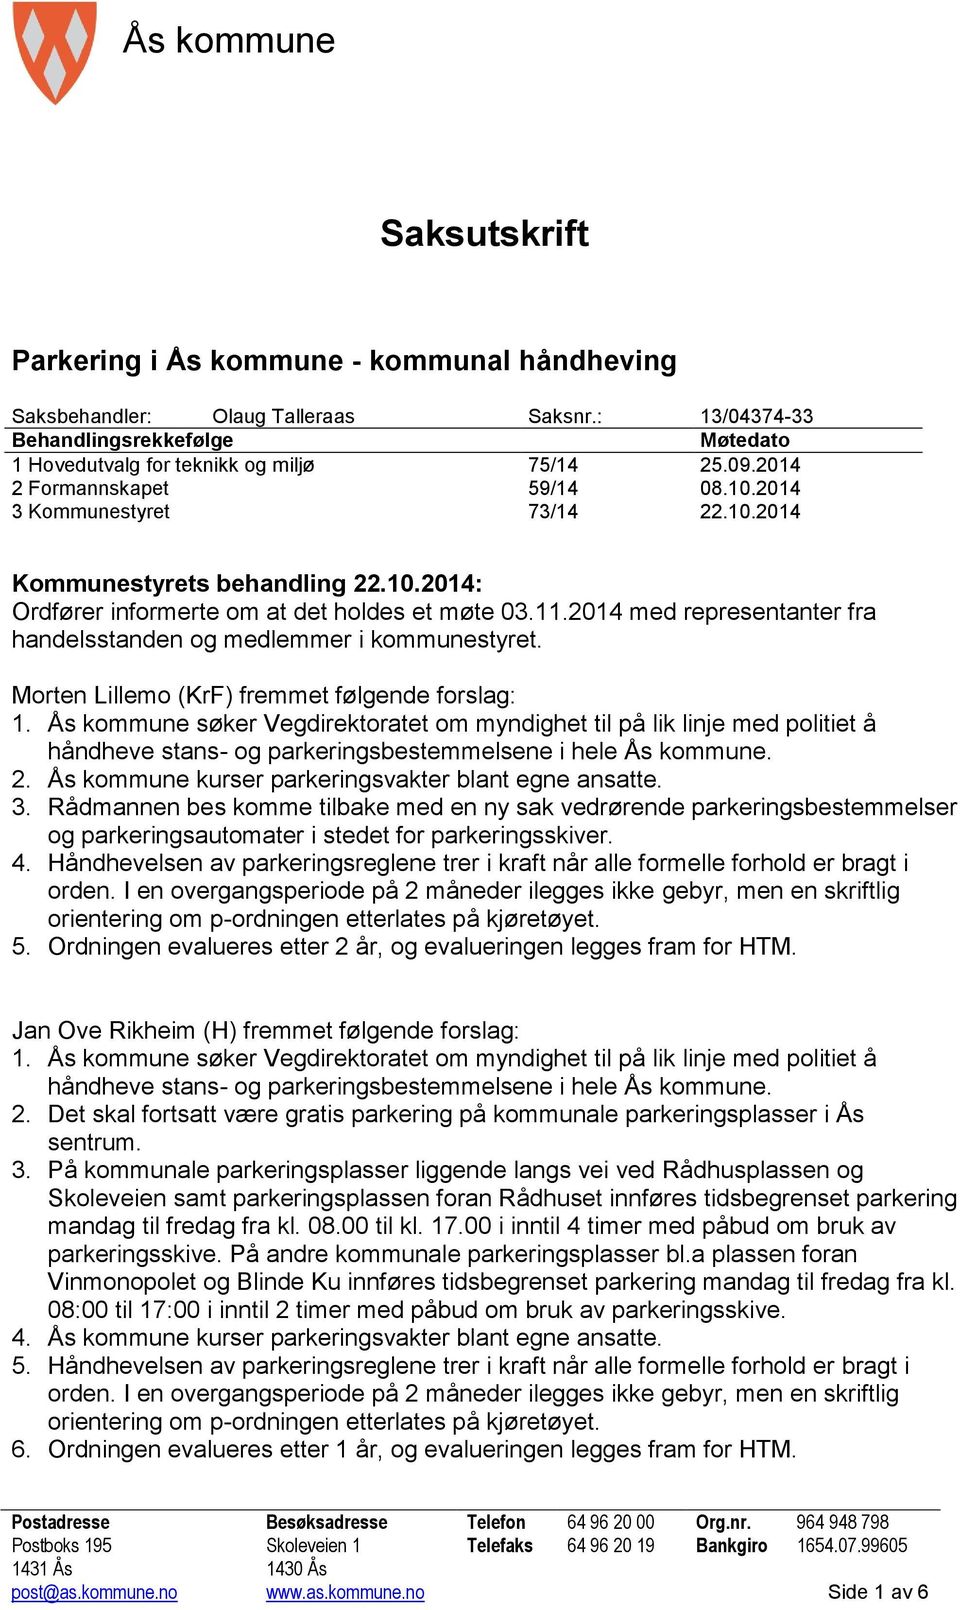 2014 med representanter fra handelsstanden og medlemmer i kommunestyret. Morten Lillemo (KrF) fremmet følgende forslag: 2. kurser parkeringsvakter blant egne ansatte. 3.